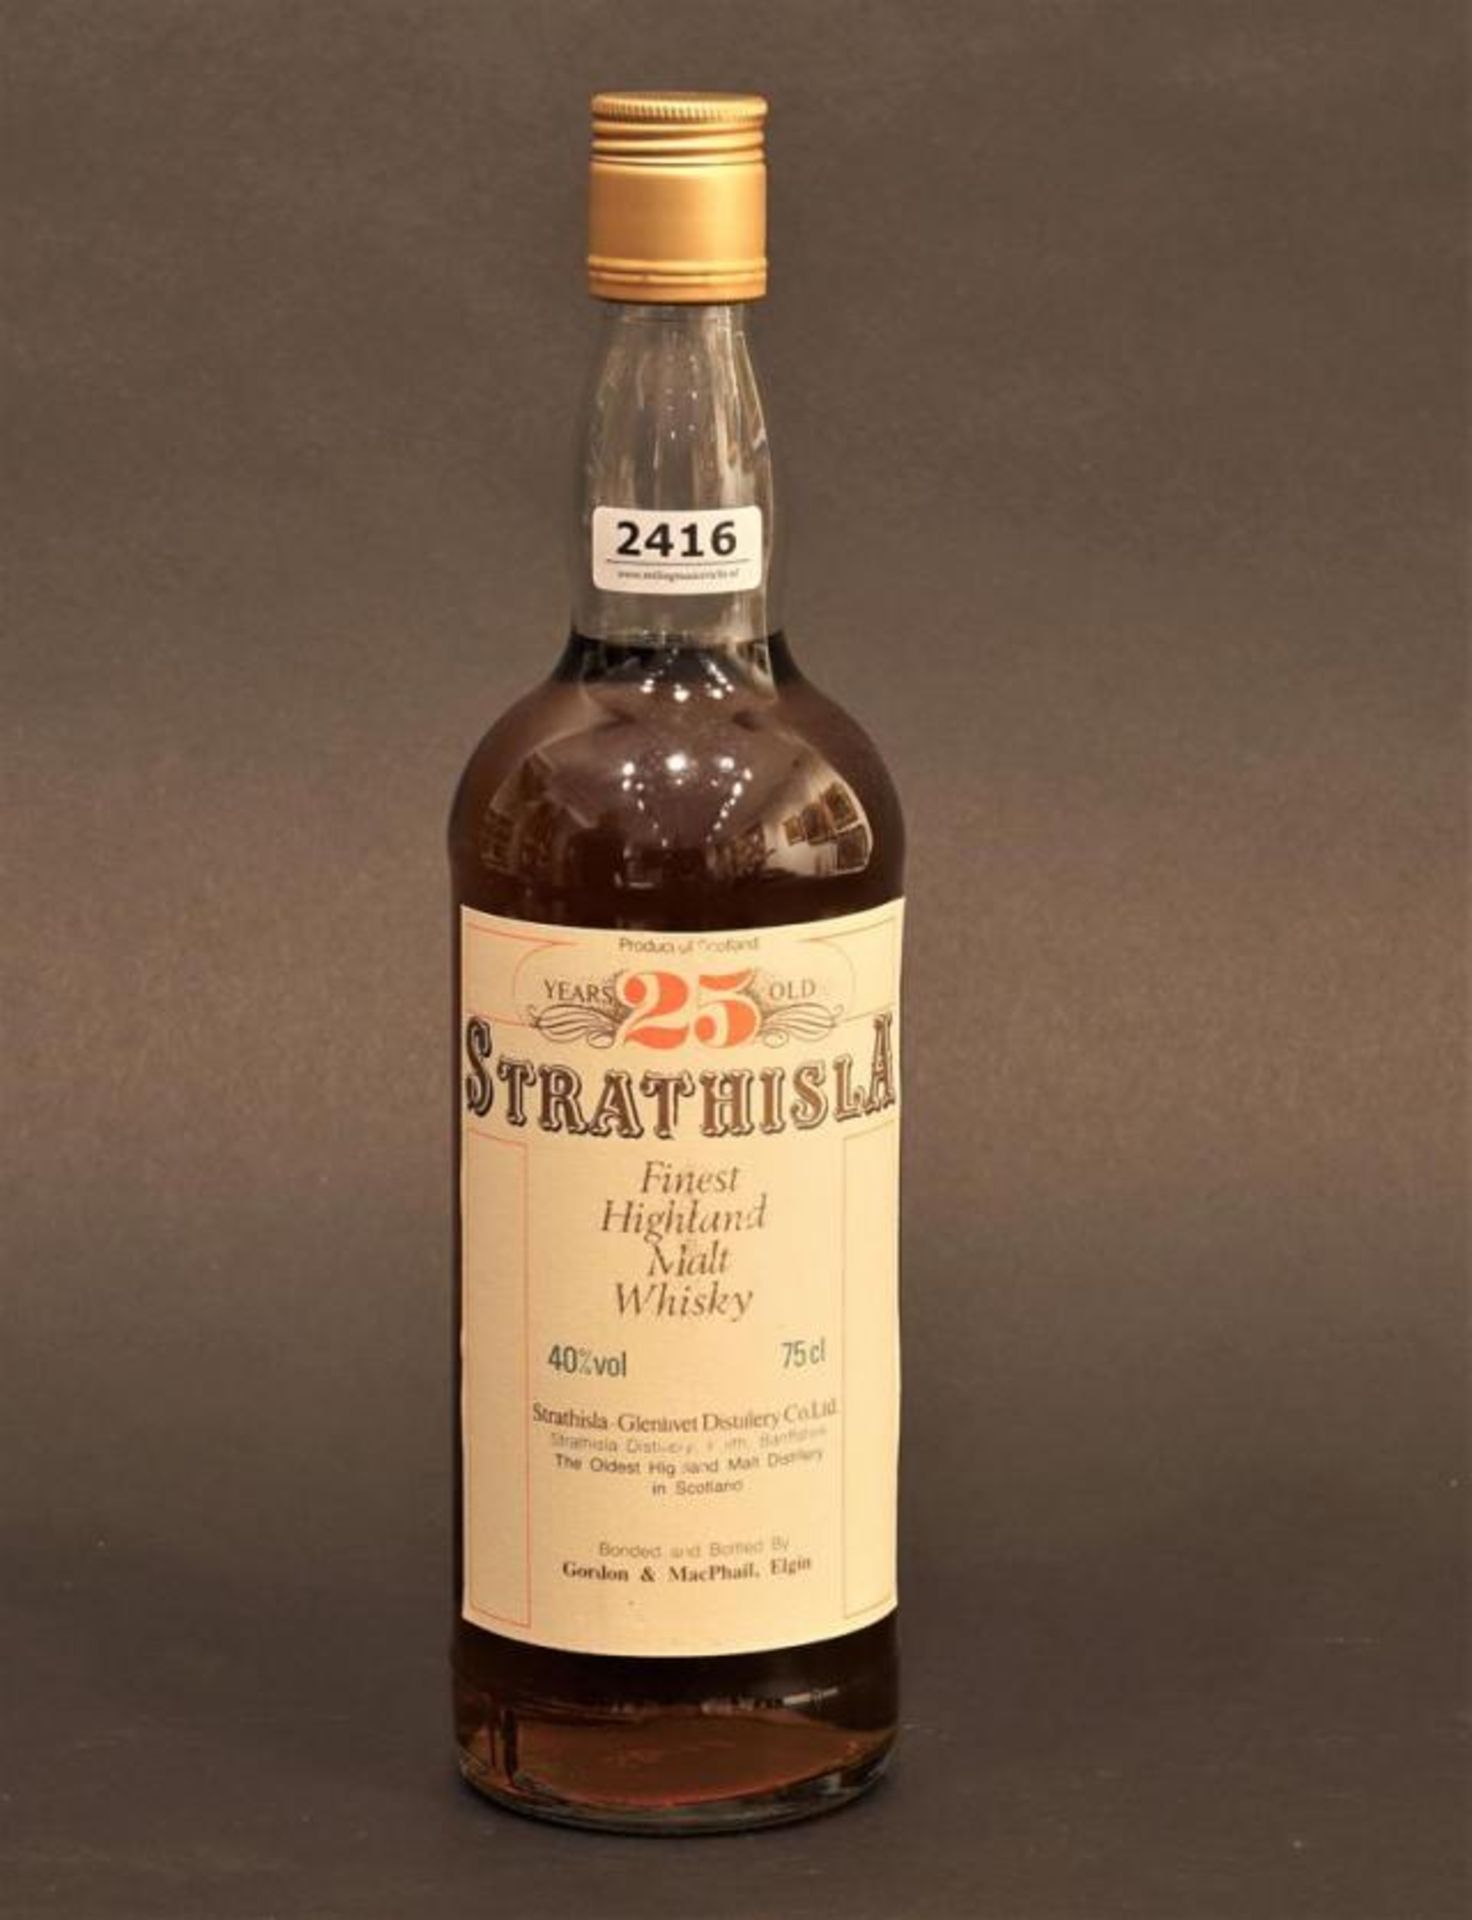 Strathisla Highland Malt Whisky, 25 years